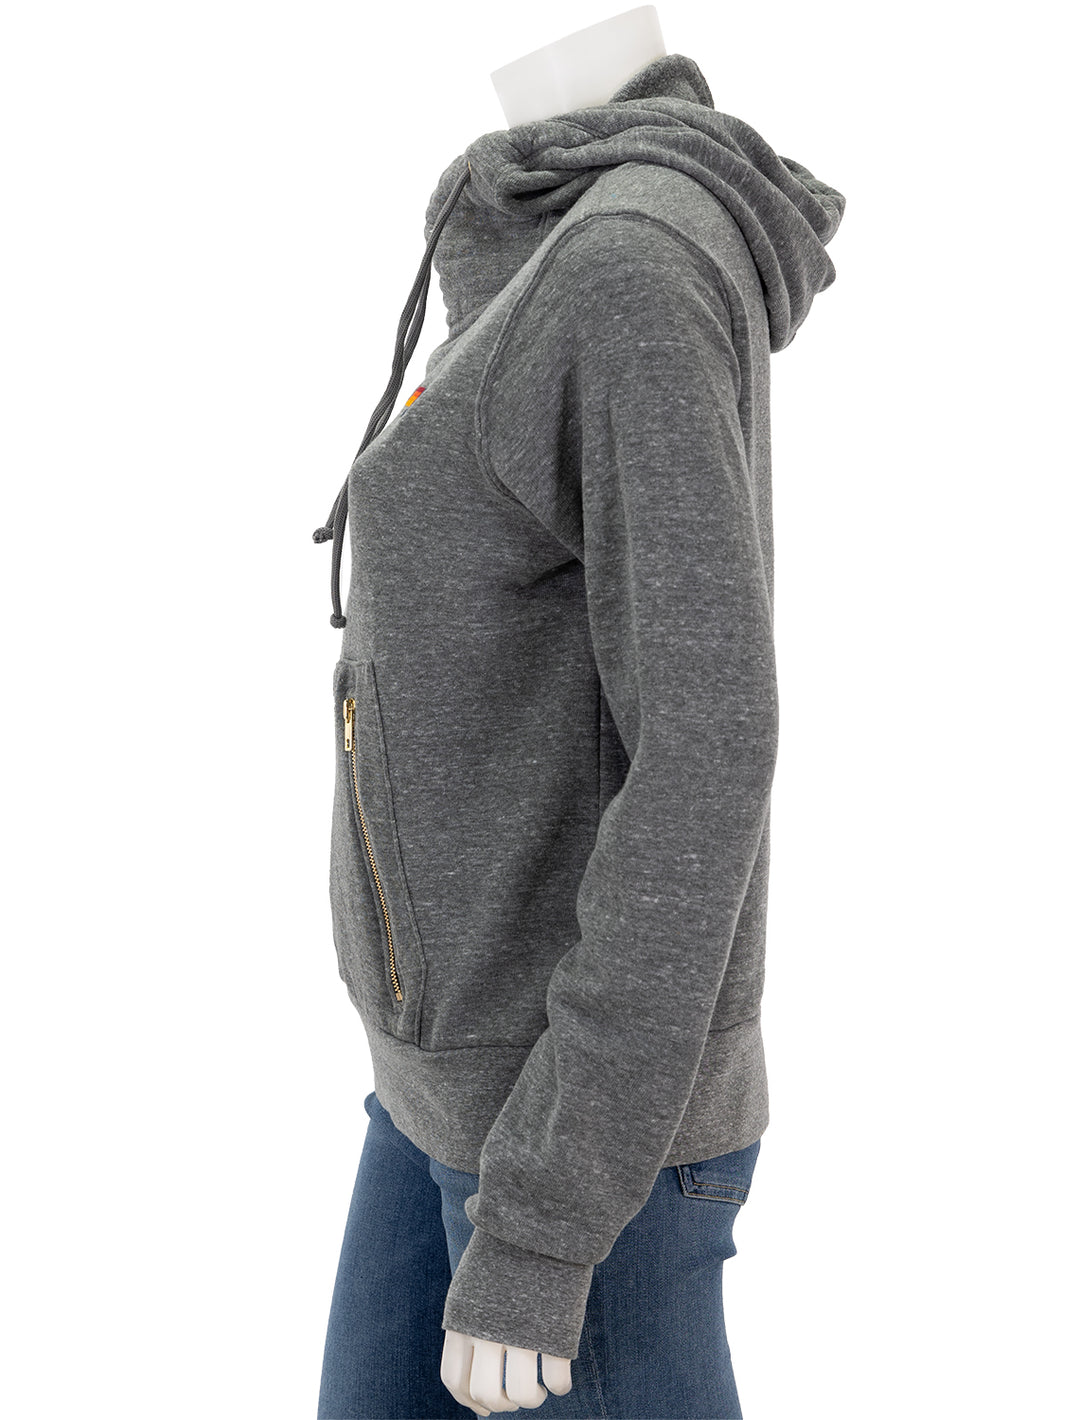 Side view of Aviator Nation's ninja hoodie in heather grey.